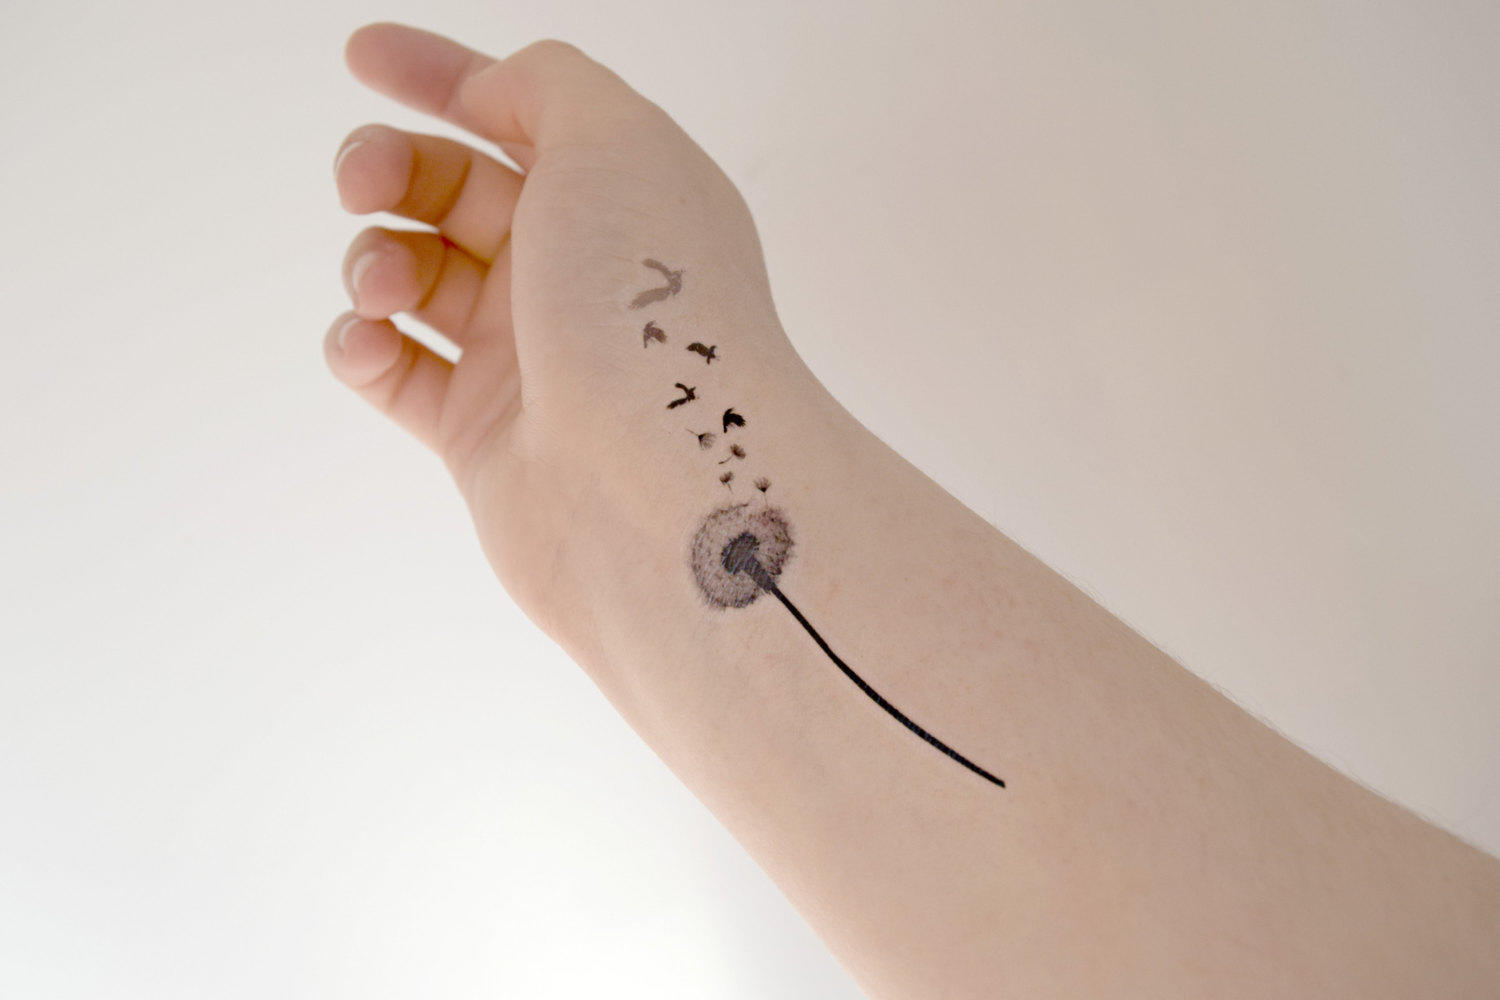 Black Ink Dandelion With Flying Birds Tattoo On Wrist